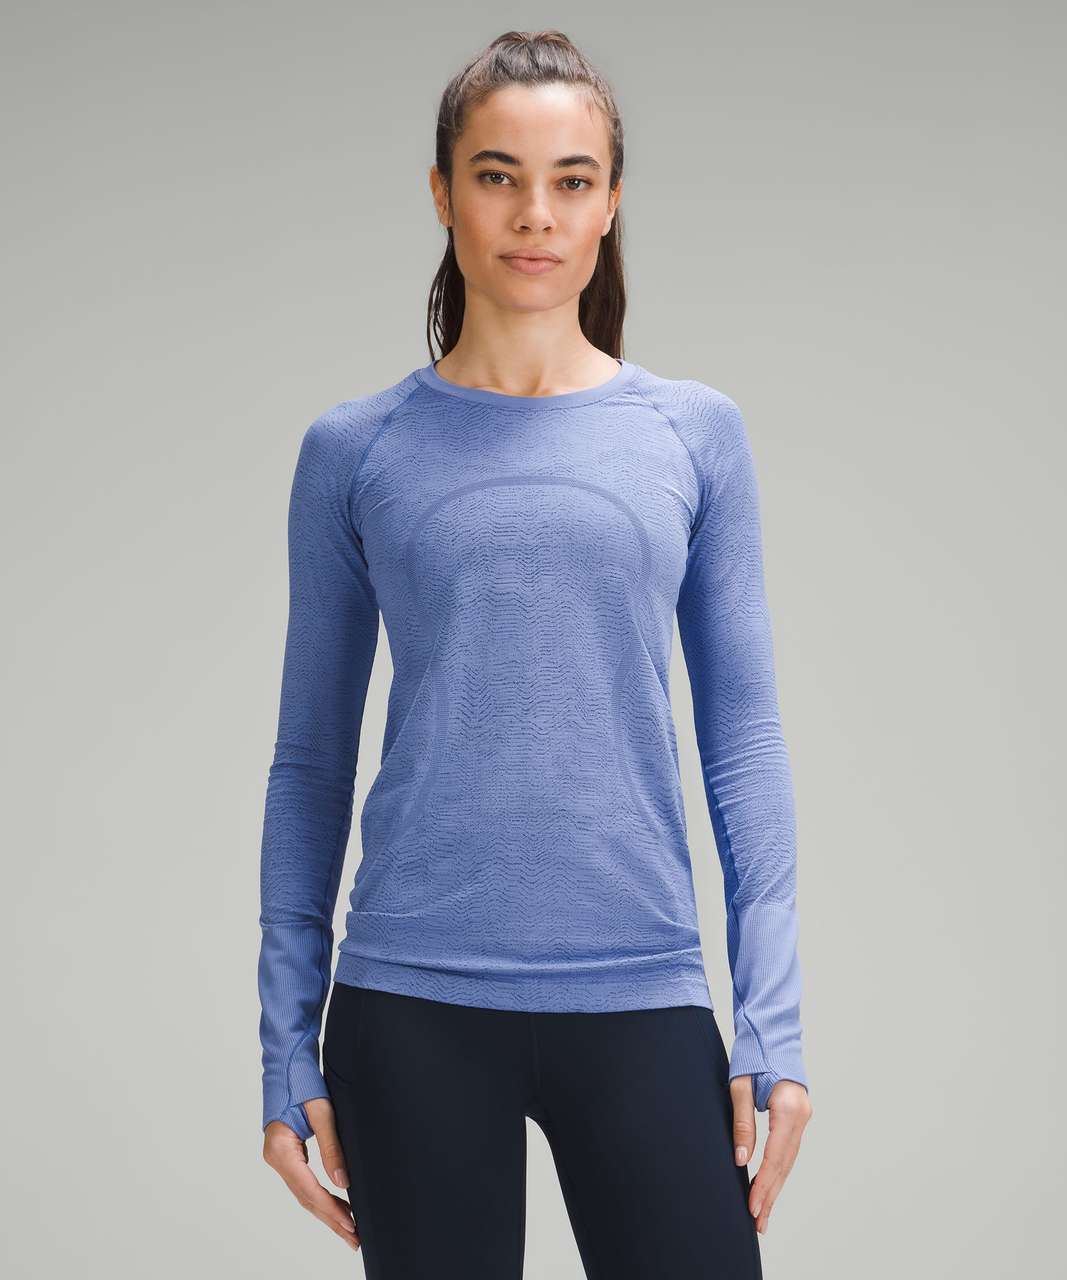 Lululemon Swiftly Tech Long Sleeve Shirt 2.0 - Mineral Blue / Soft